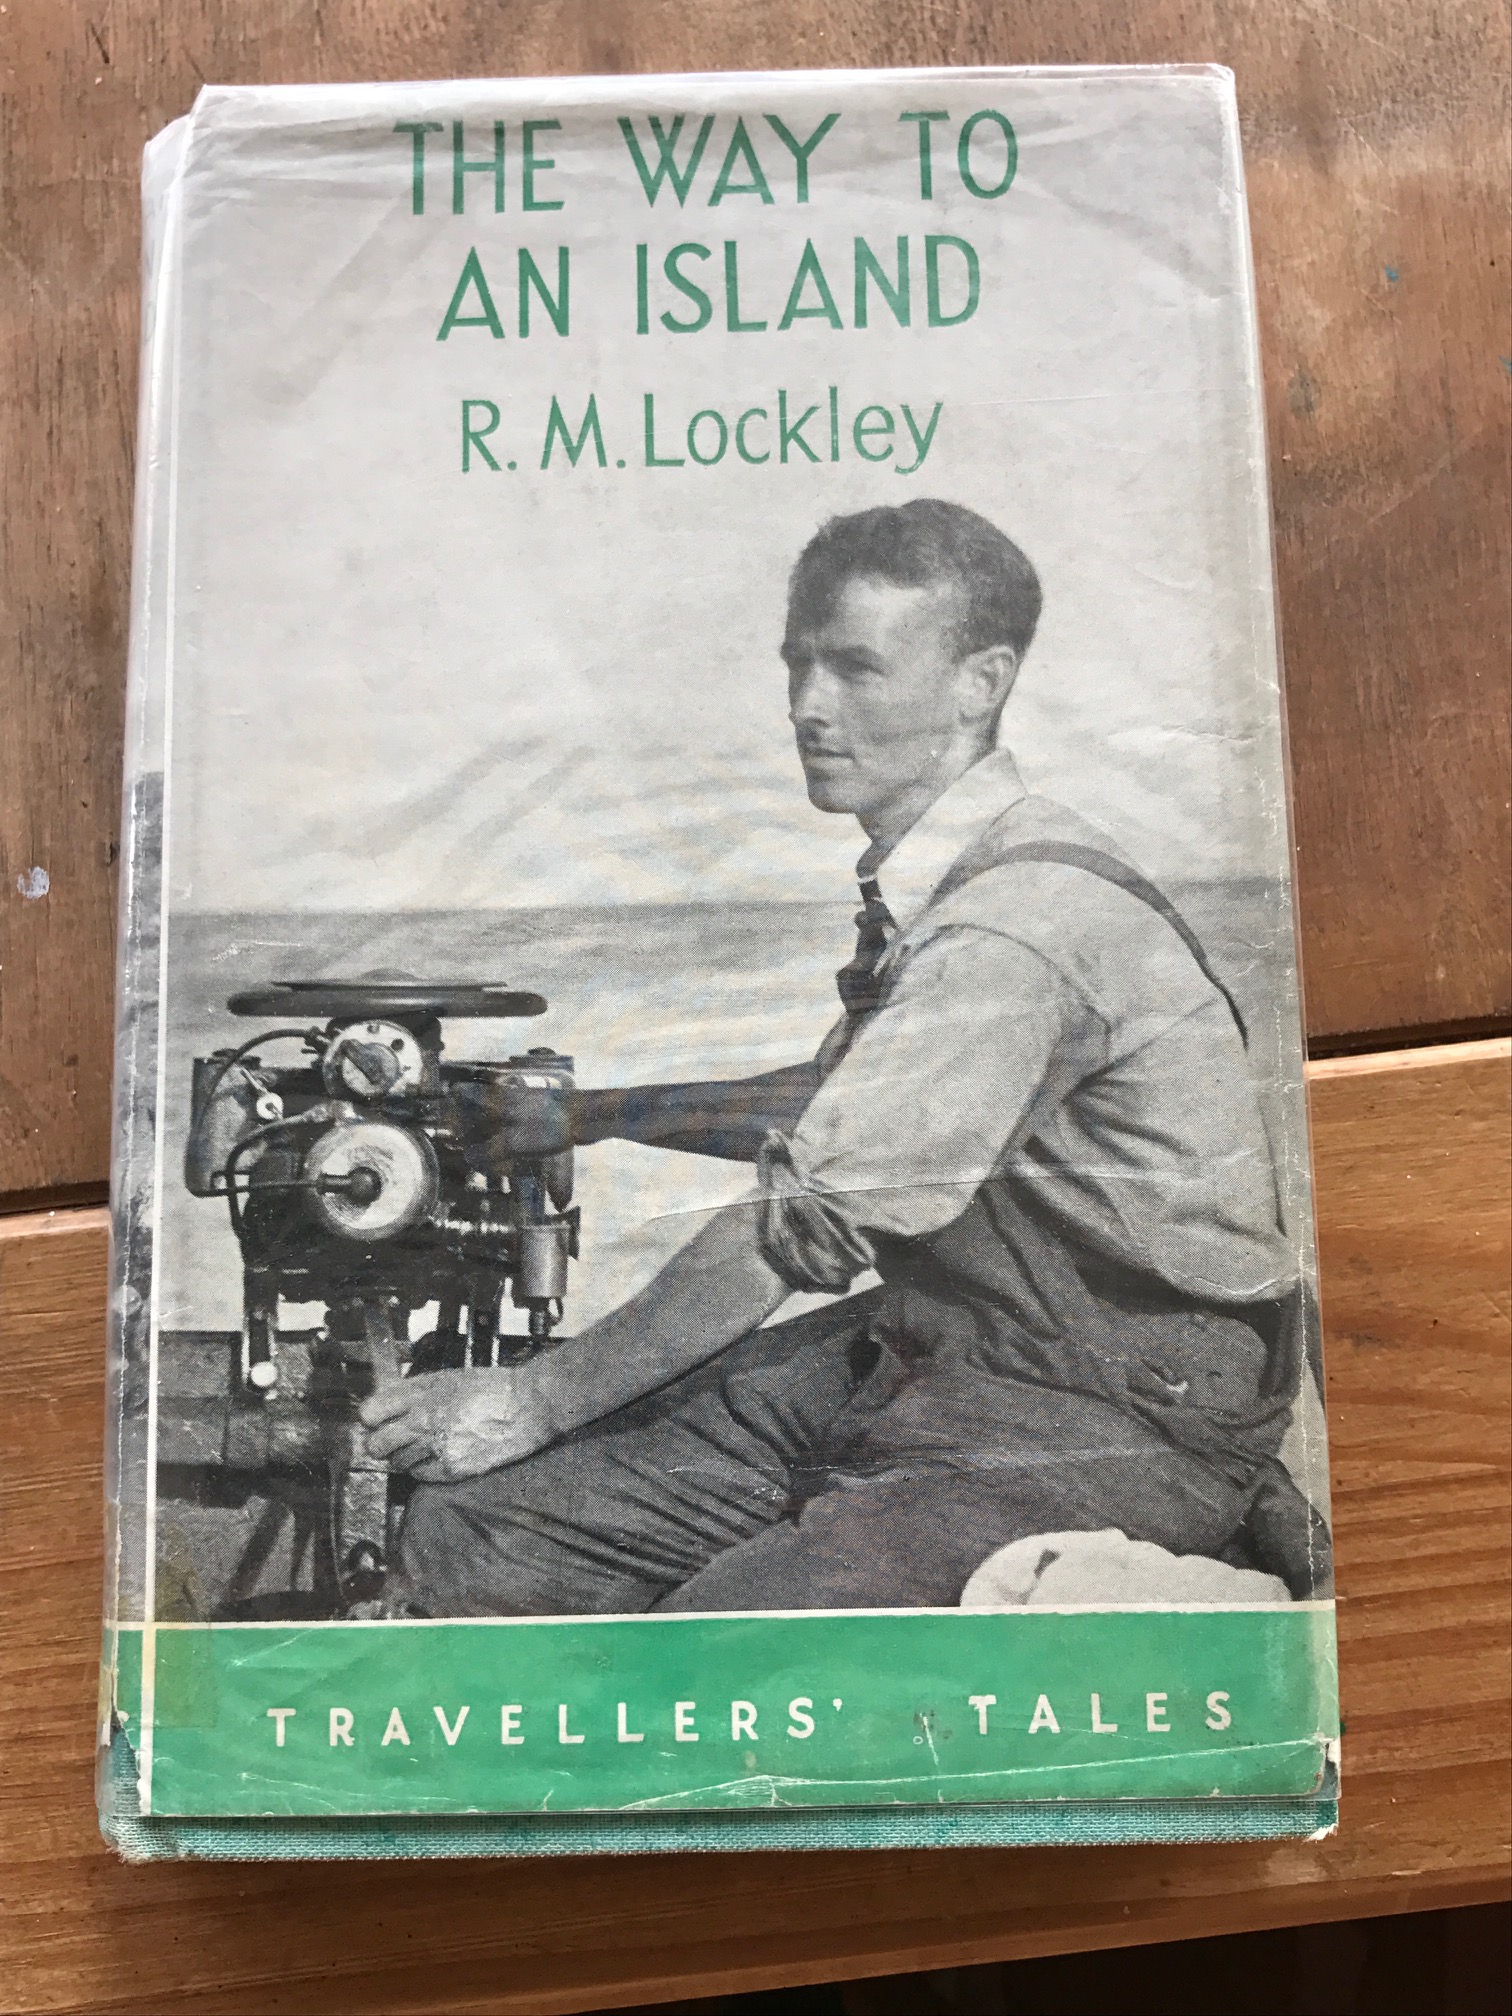 Kate Strudwick: "The Way to an Island" - Ronald Lockley.